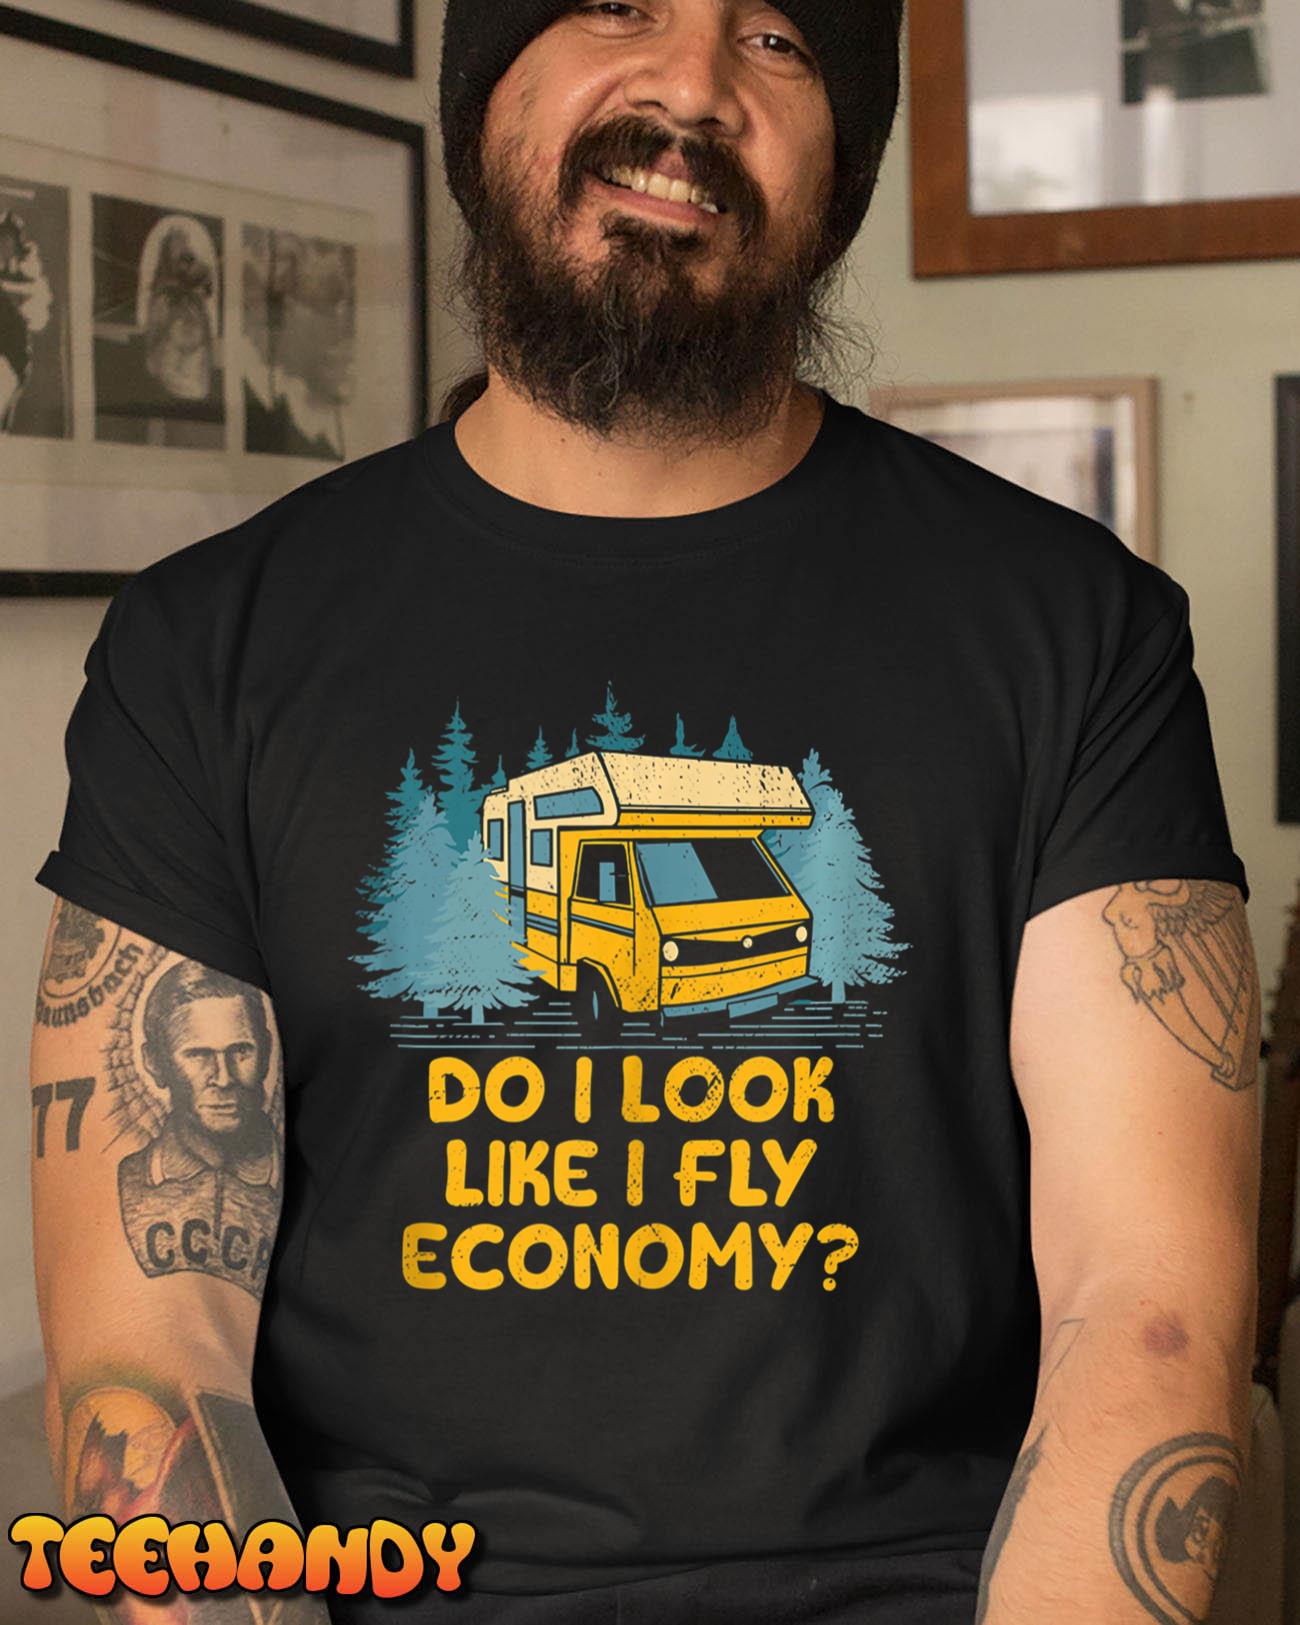 I Fly Economy Road Trip Funny Adventure Humor T Shirt